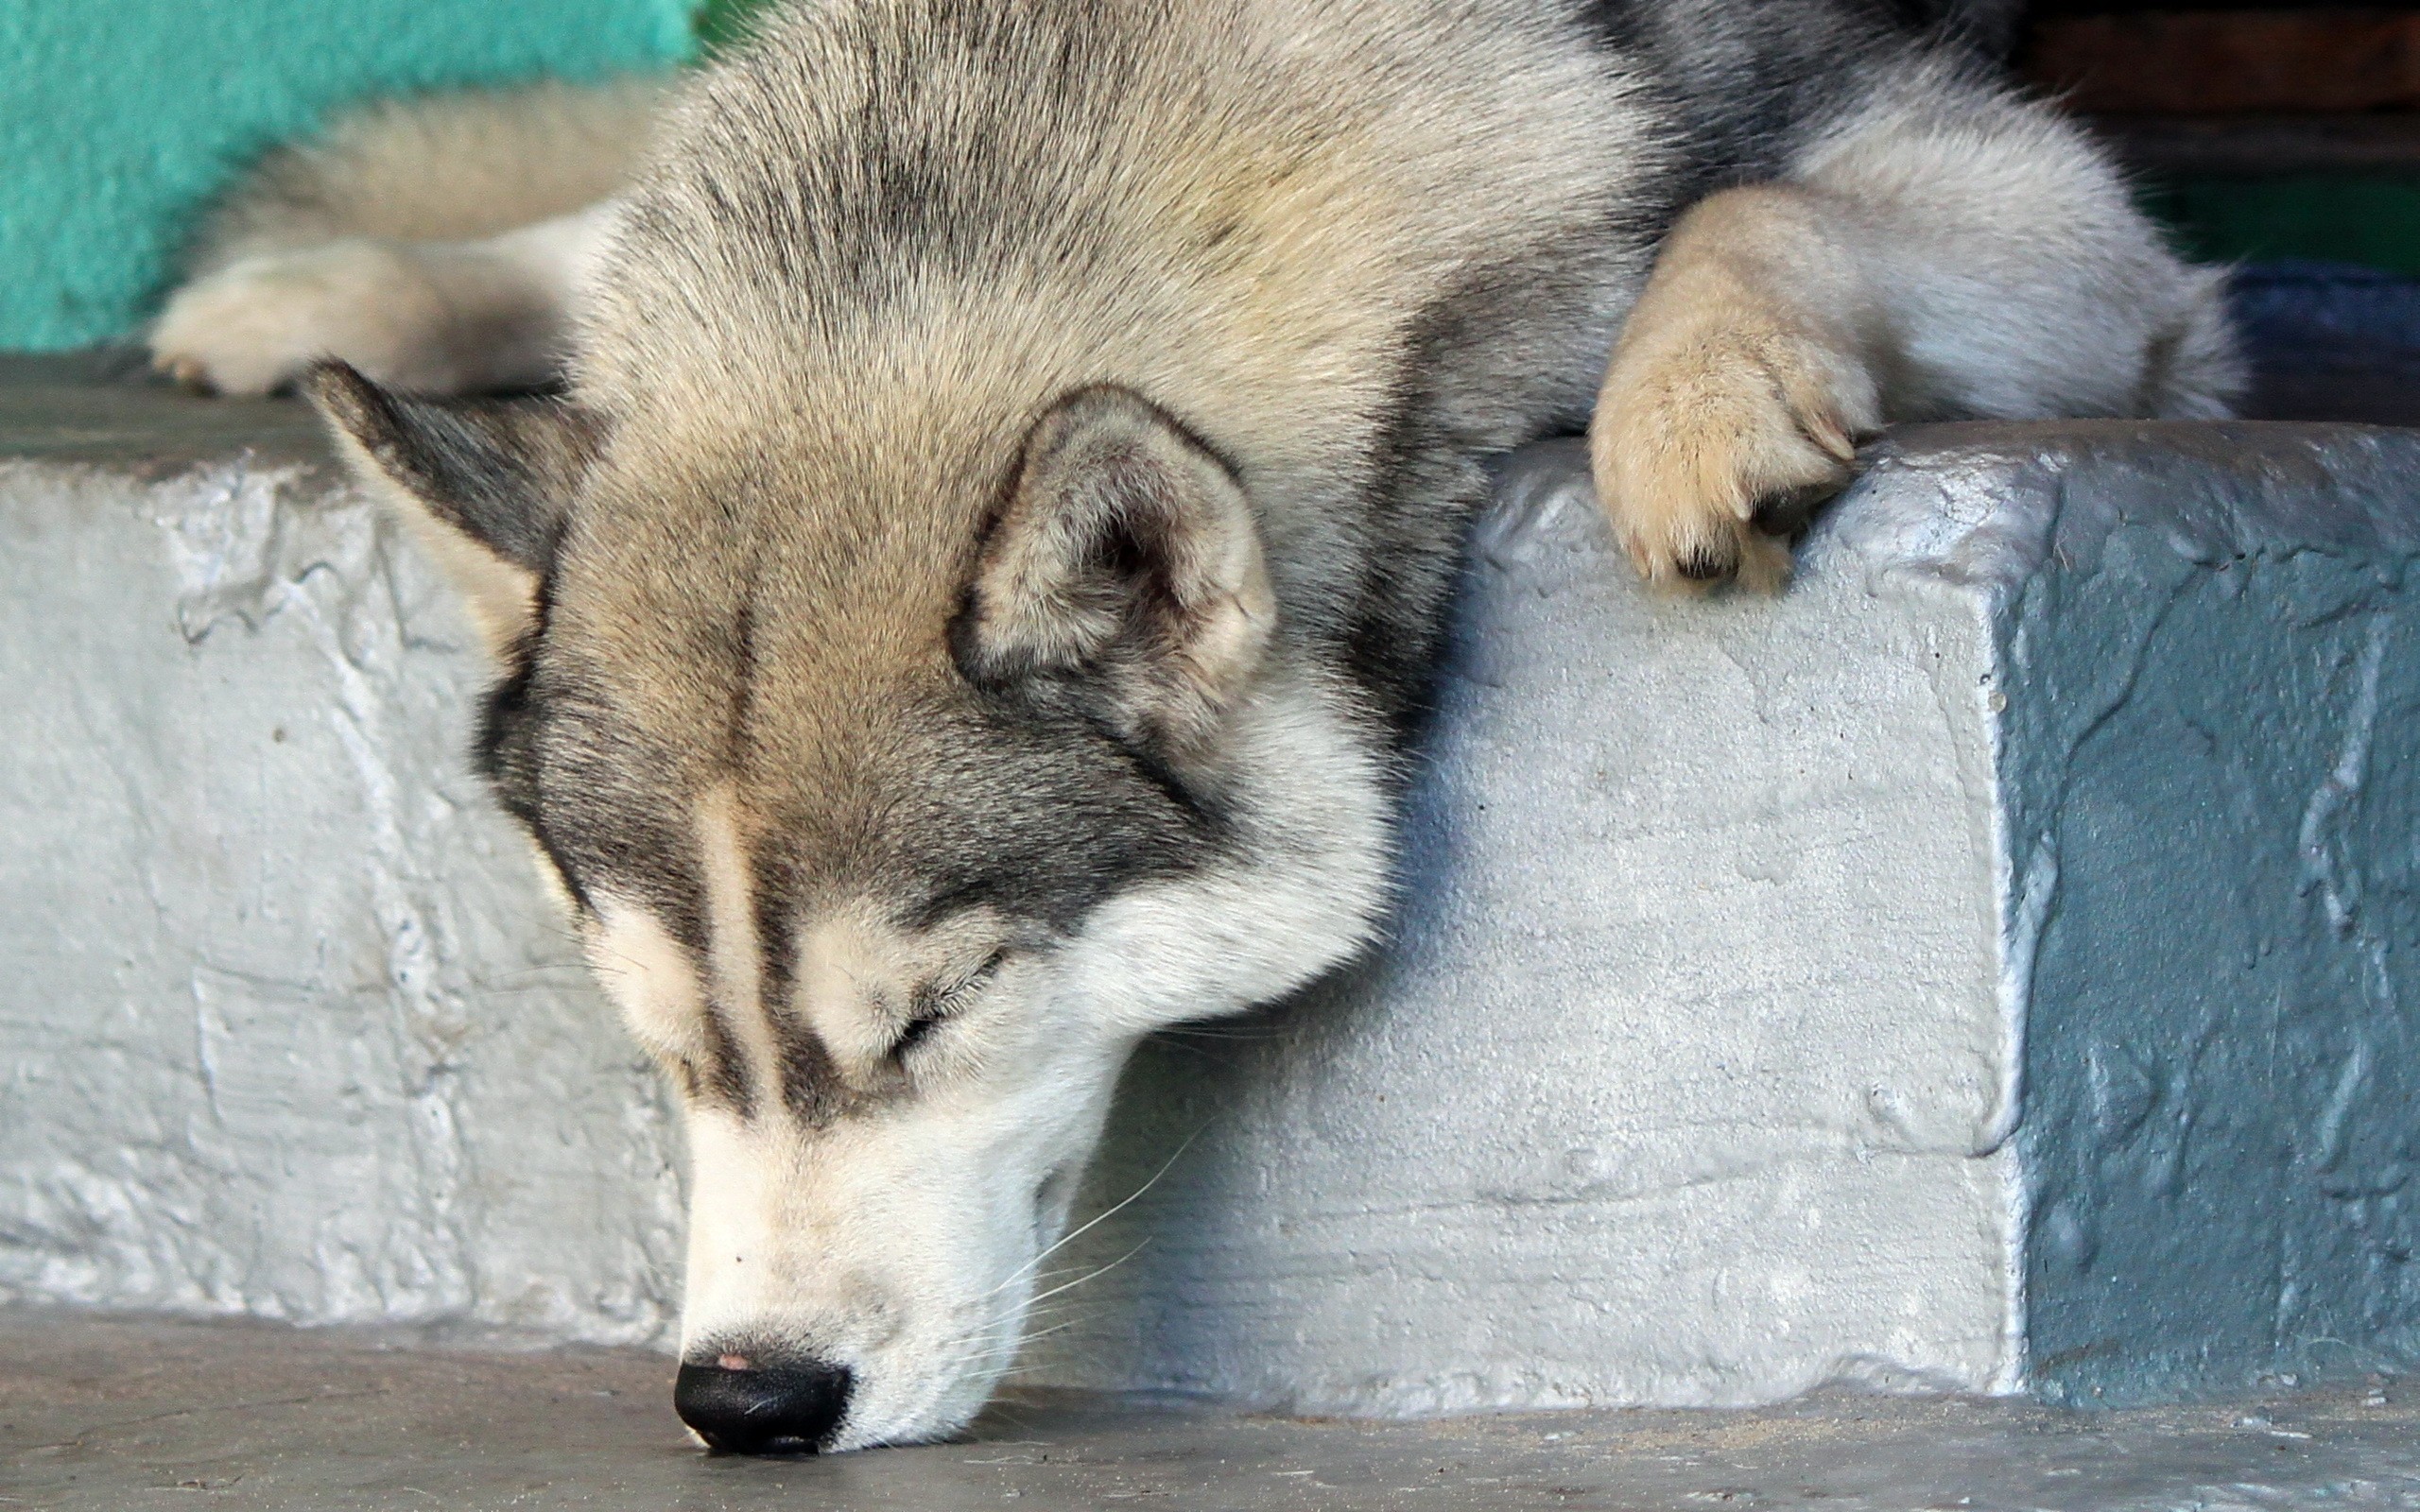 General 2560x1600 animals dog fur closed eyes Alaskan Malamute sleeping